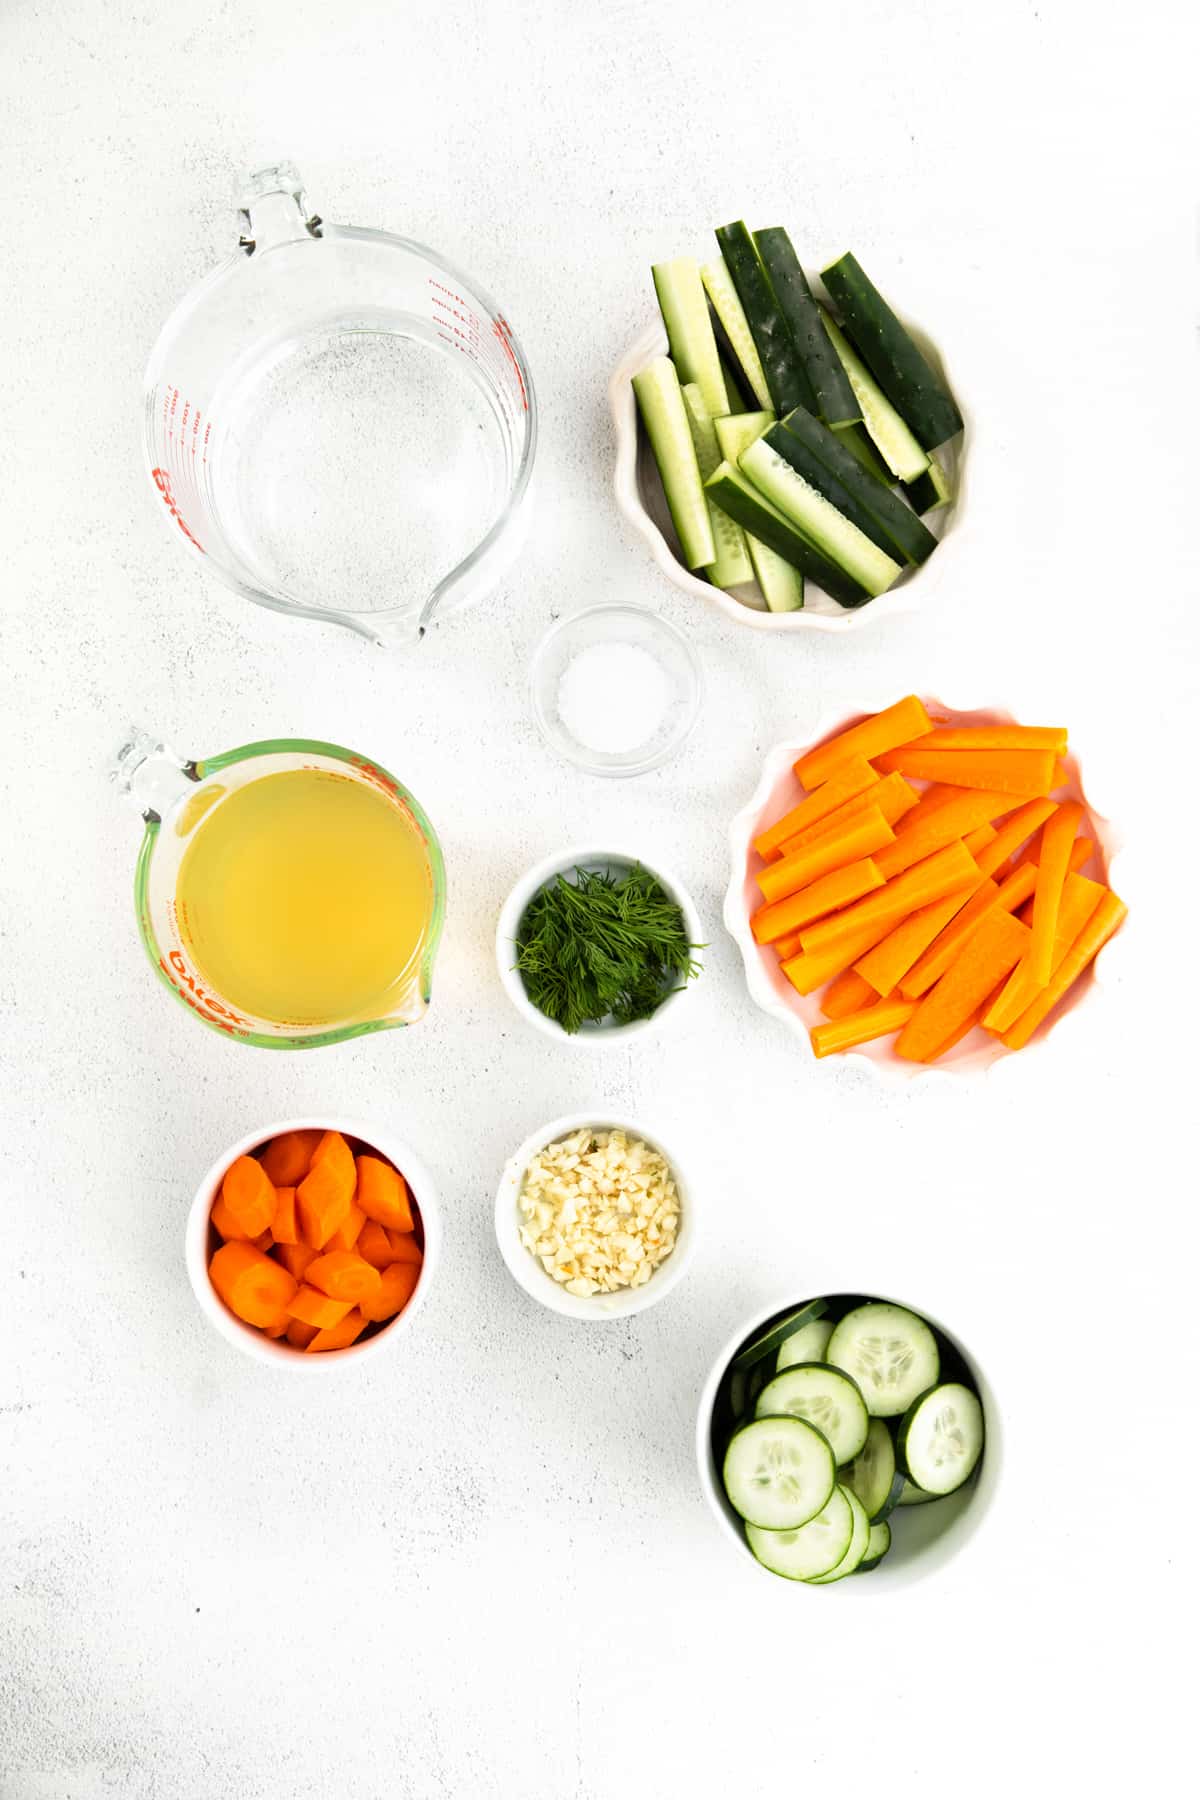 Ingredients in bowls: water, vinegar, cucumbers spears, cucumbers slices, carrot spears, carrot slices, garlic, dill, salt.